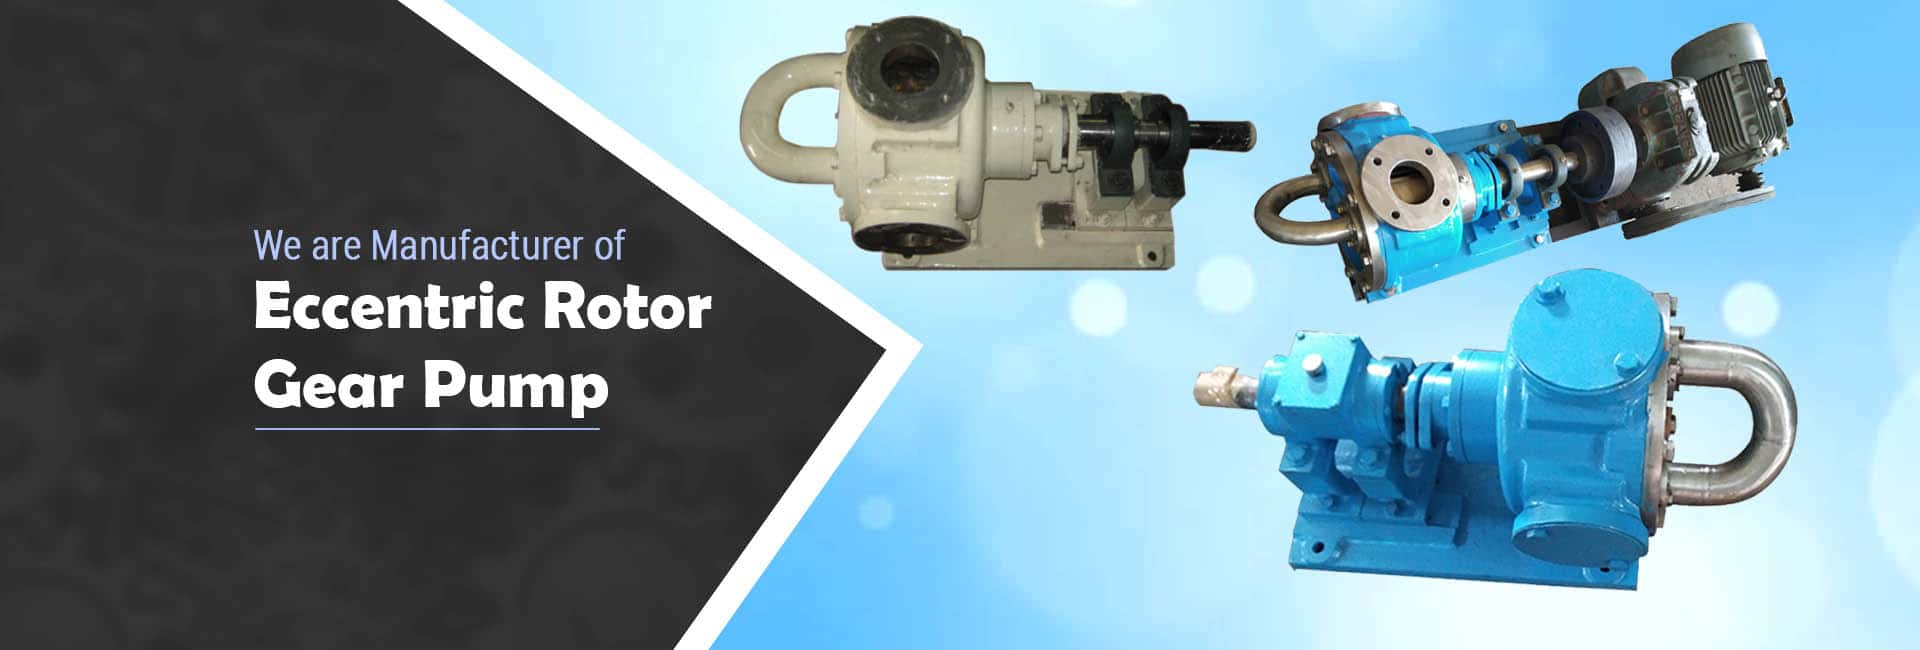 eccentric rotor gear pump exporter in gujarat